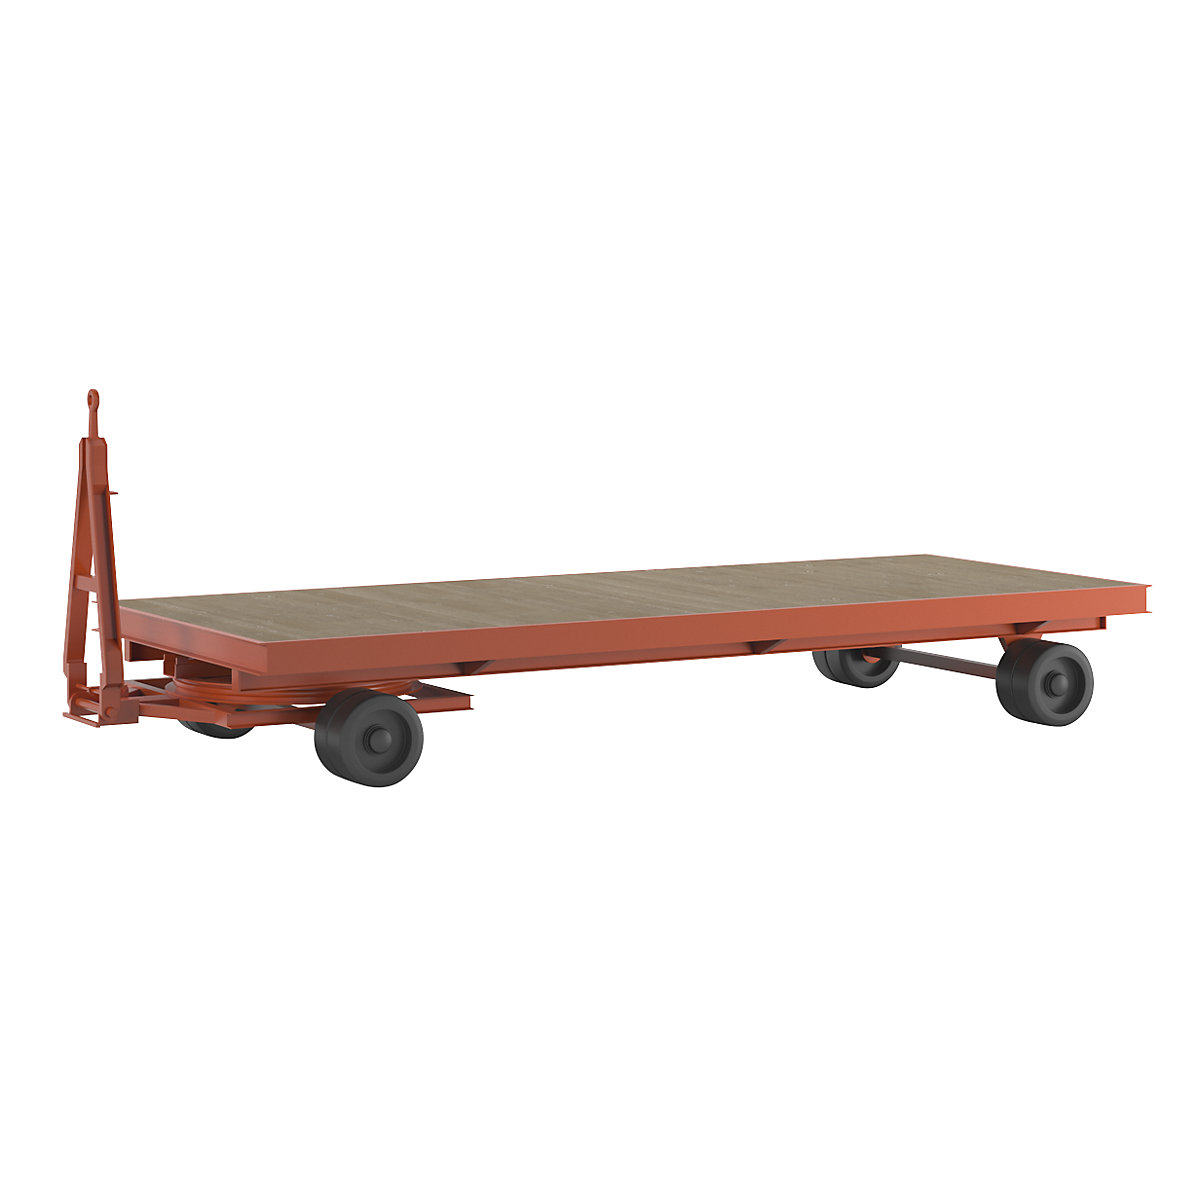 Heavy goods trailer, 16 t, turntable steering, platform 5.0 x 2.0 m-1